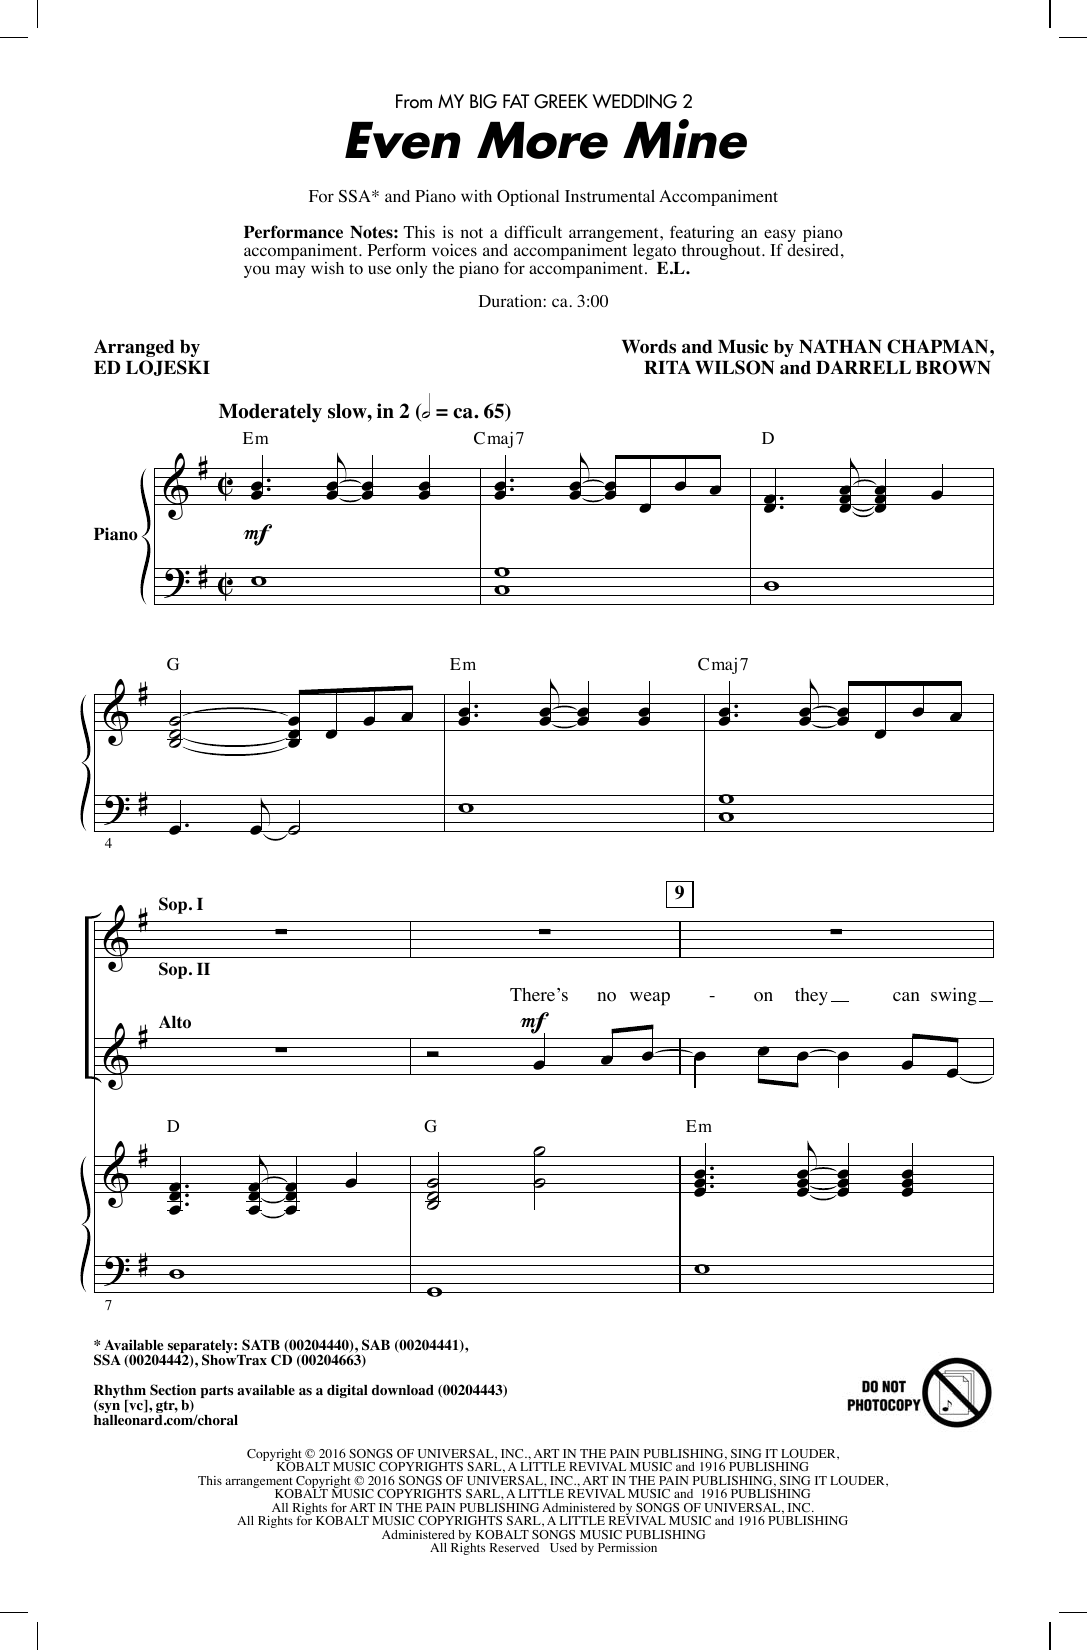 Rita Wilson Even More Mine (arr. Ed Lojeski) Sheet Music Notes & Chords for SATB - Download or Print PDF